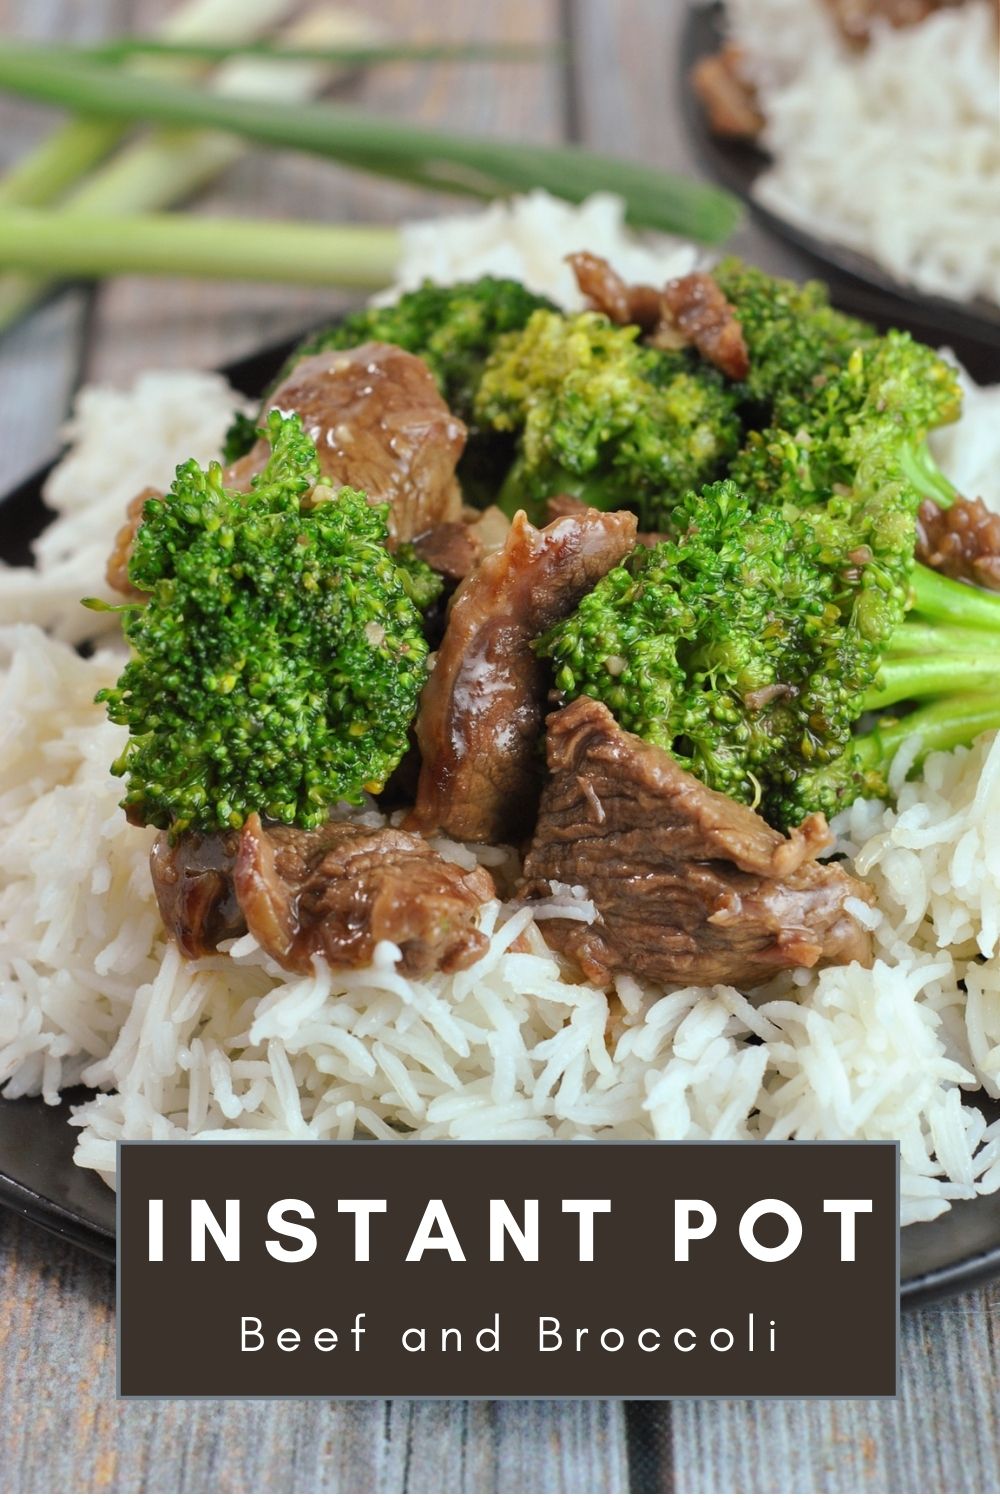 Instant Pot Beef and Broccoli via @preventionrd